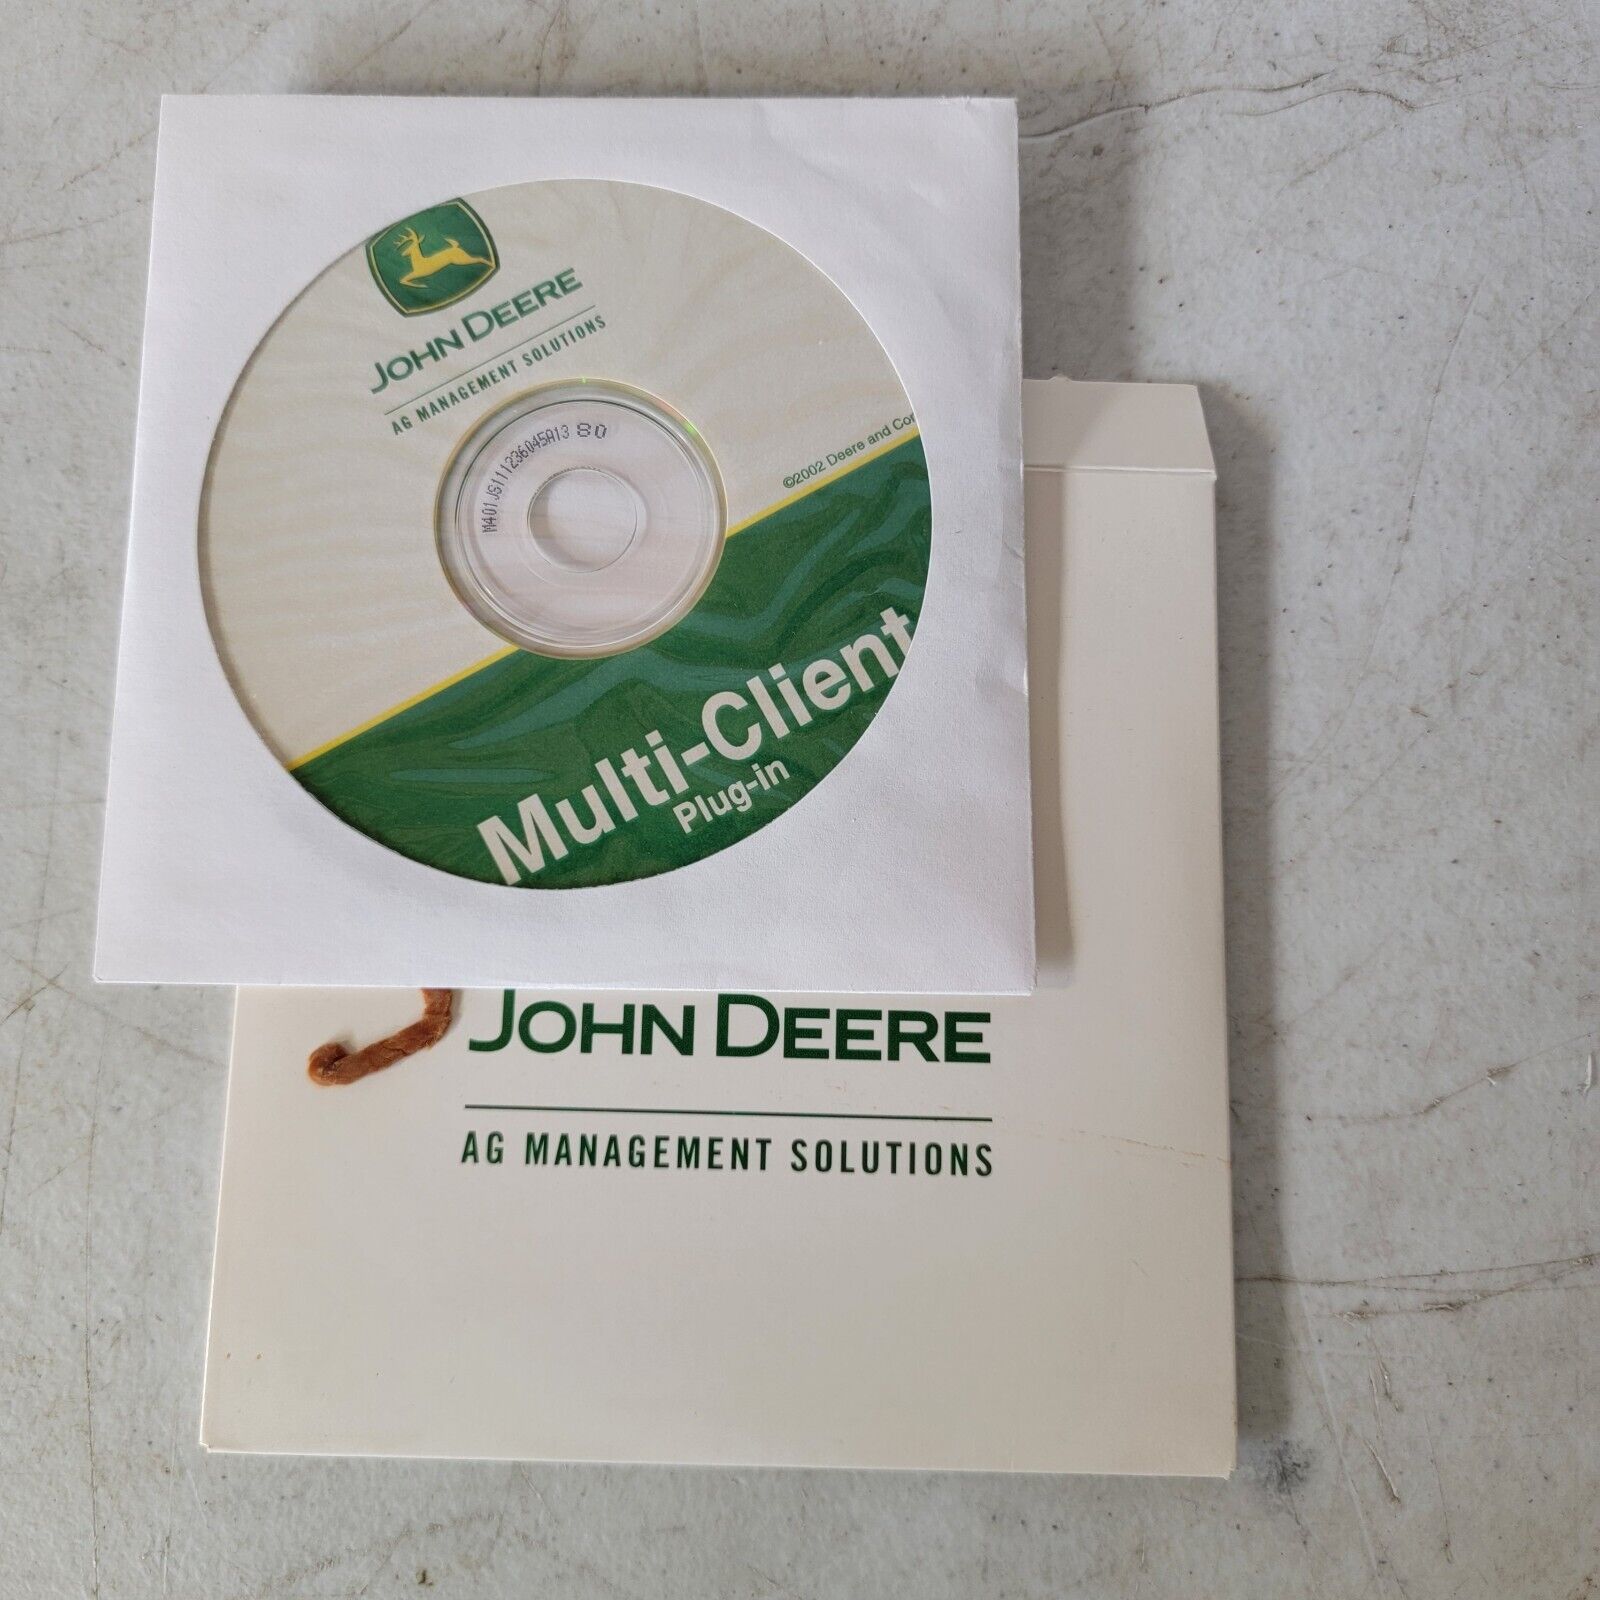 John Deere Multi-Client Plugin PF90169 AMS Ag Management System CD Software Disk